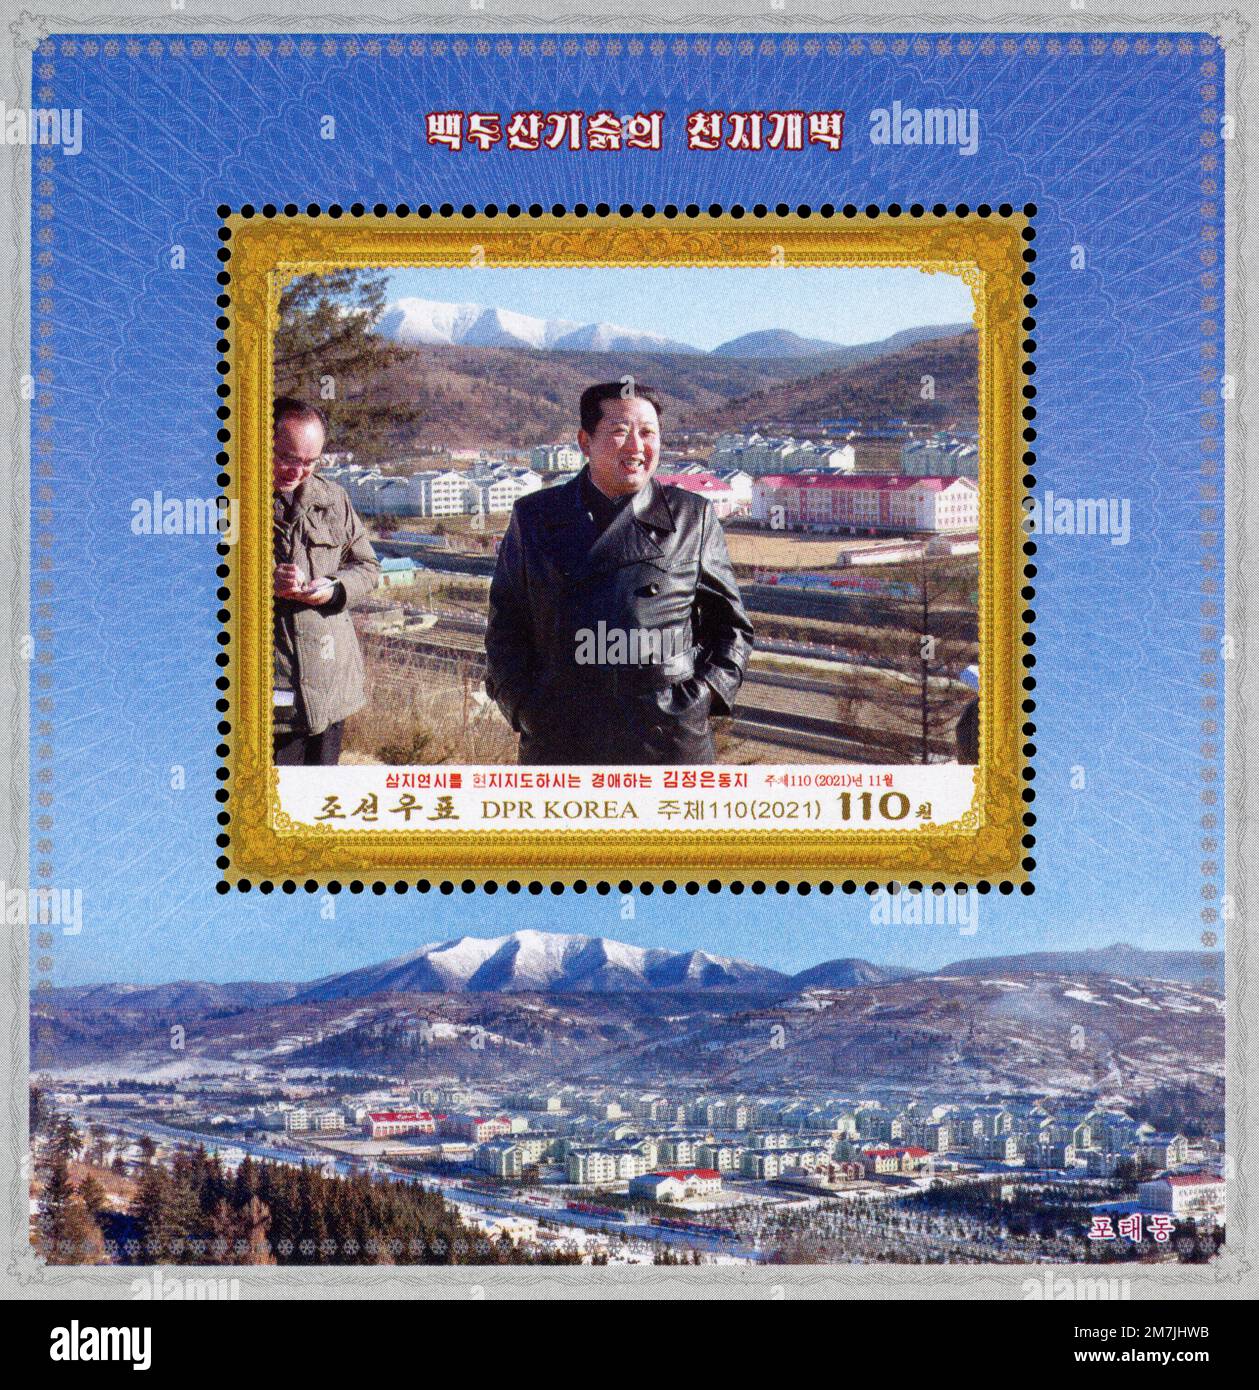 2021 Nordkorea-Stempel. Kim Jong-UN besucht Samjiyeon, eine sozialistische Bergkulturstadt namens sozialistische Utopia Stockfoto